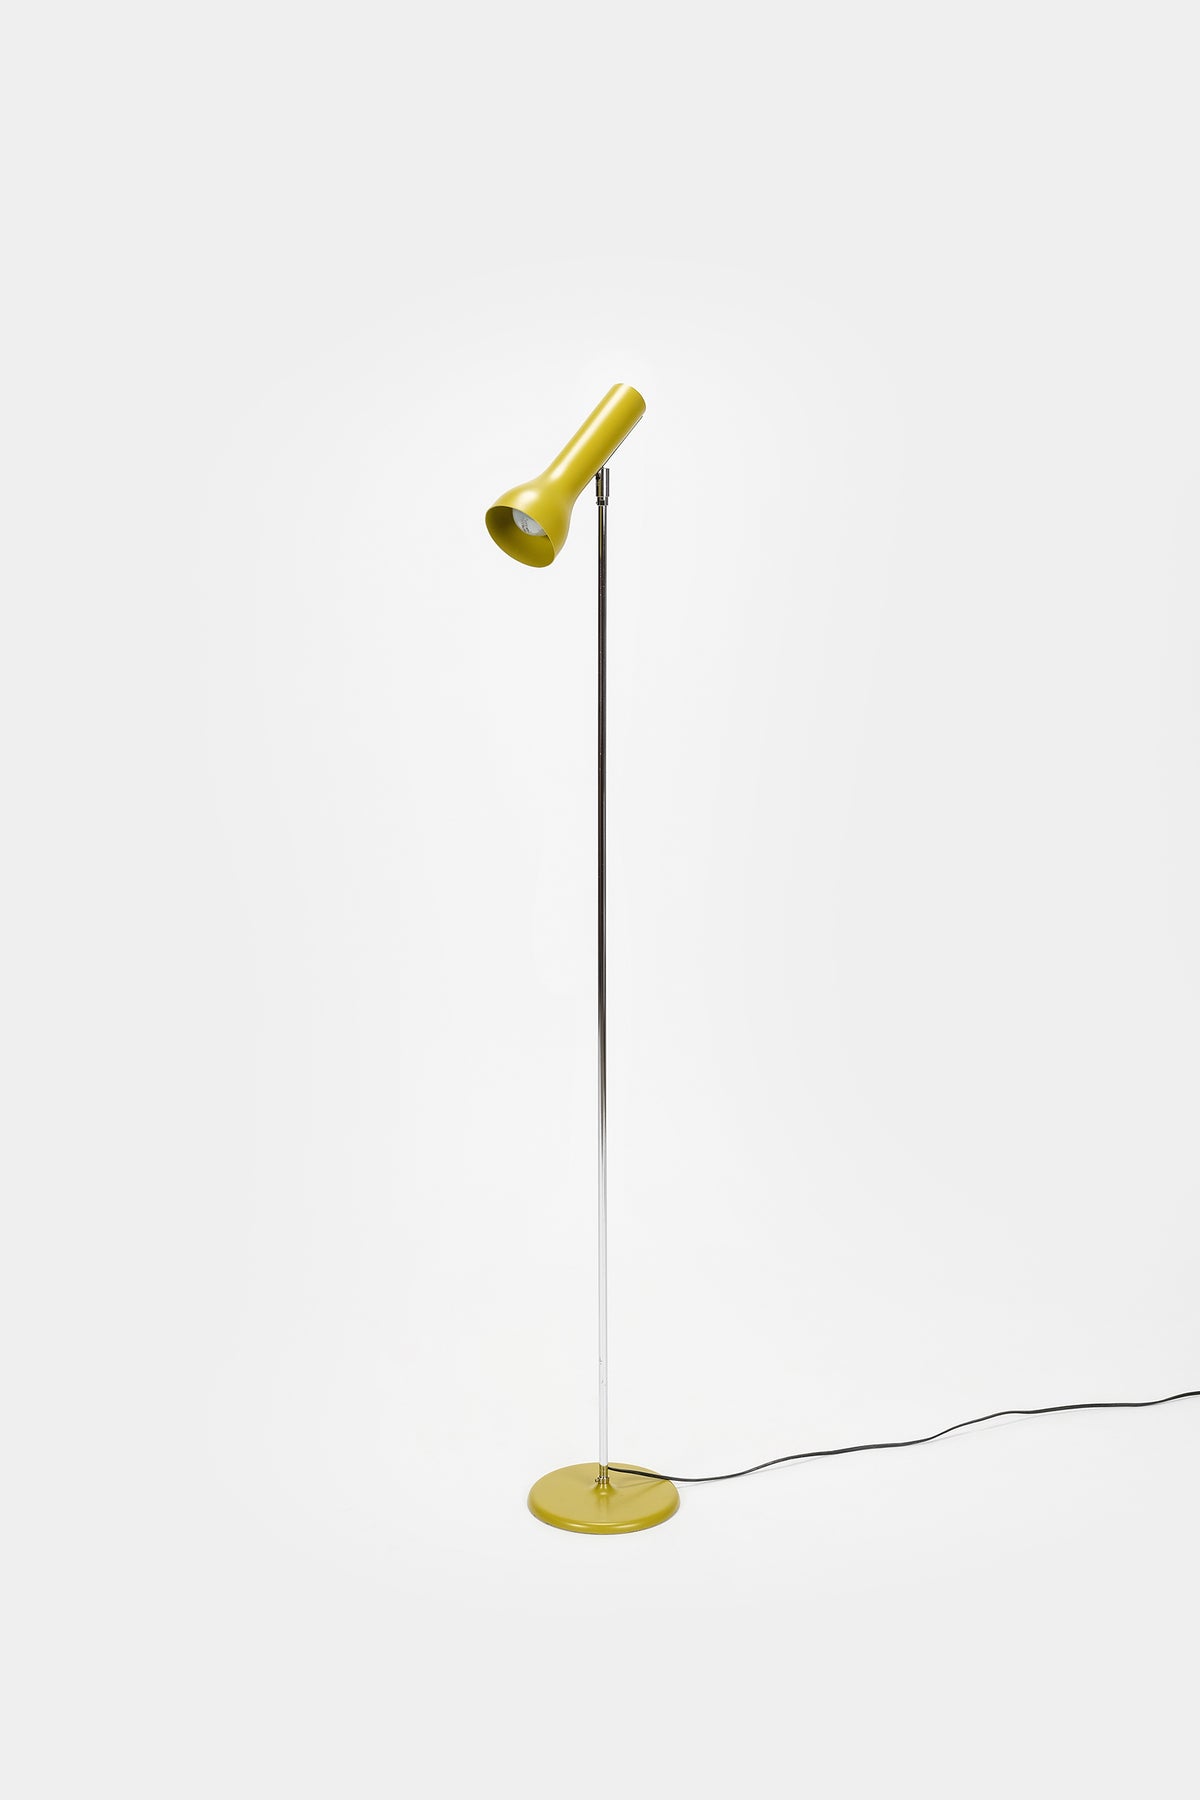 Floor Lamp, Swisslamp International, 60s